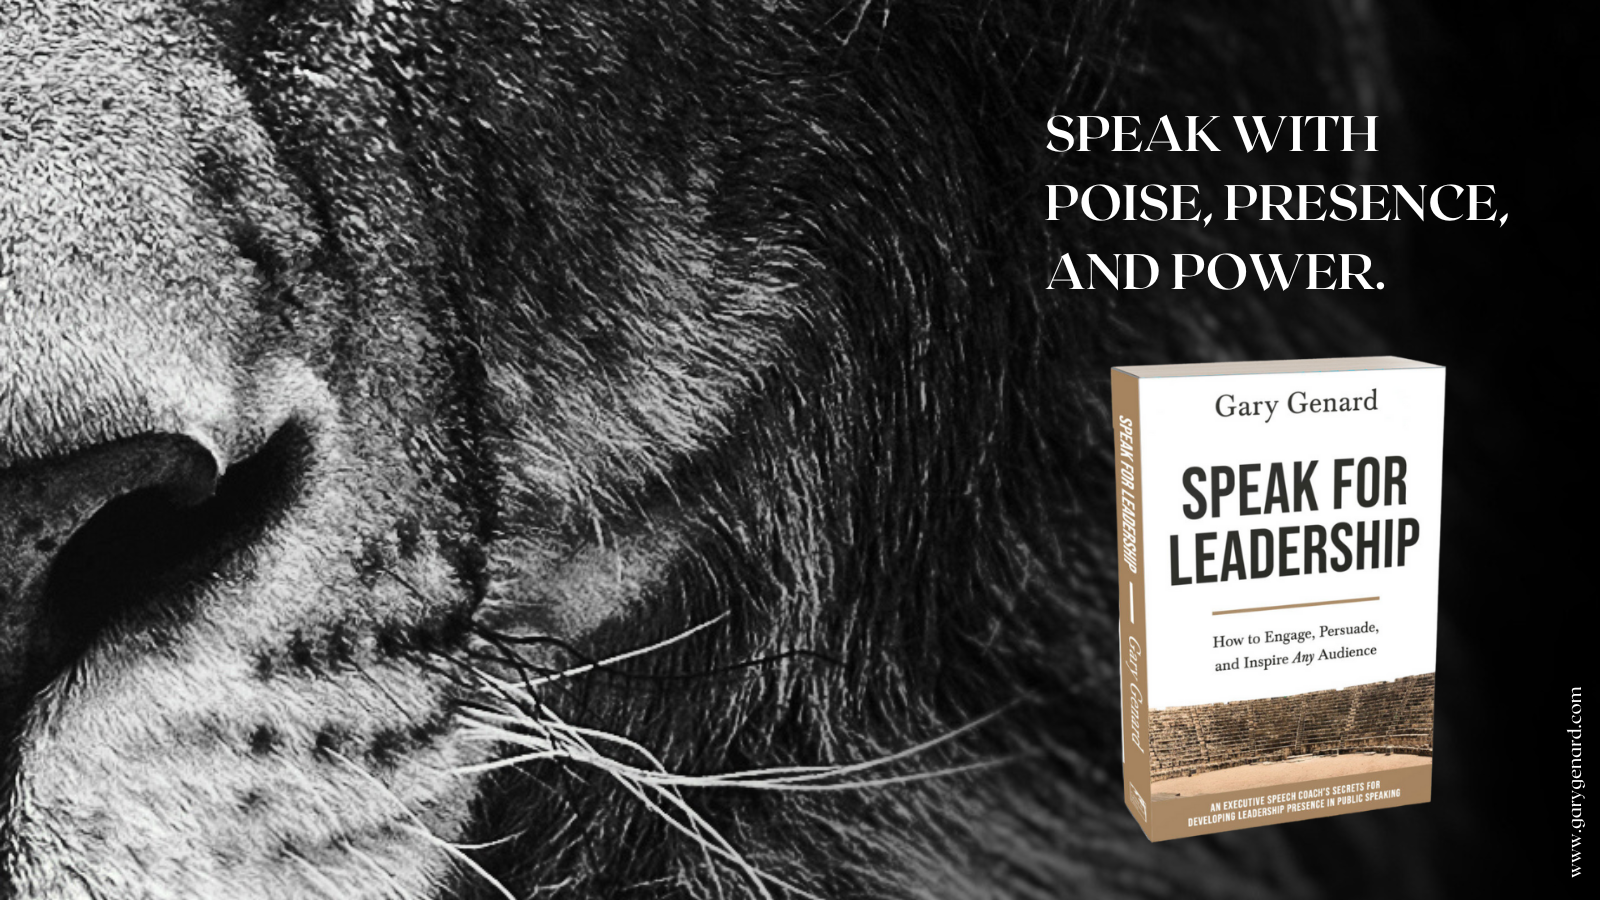 Dr. Gary Genard's book on developing leadership presence, Speak for Leadership.